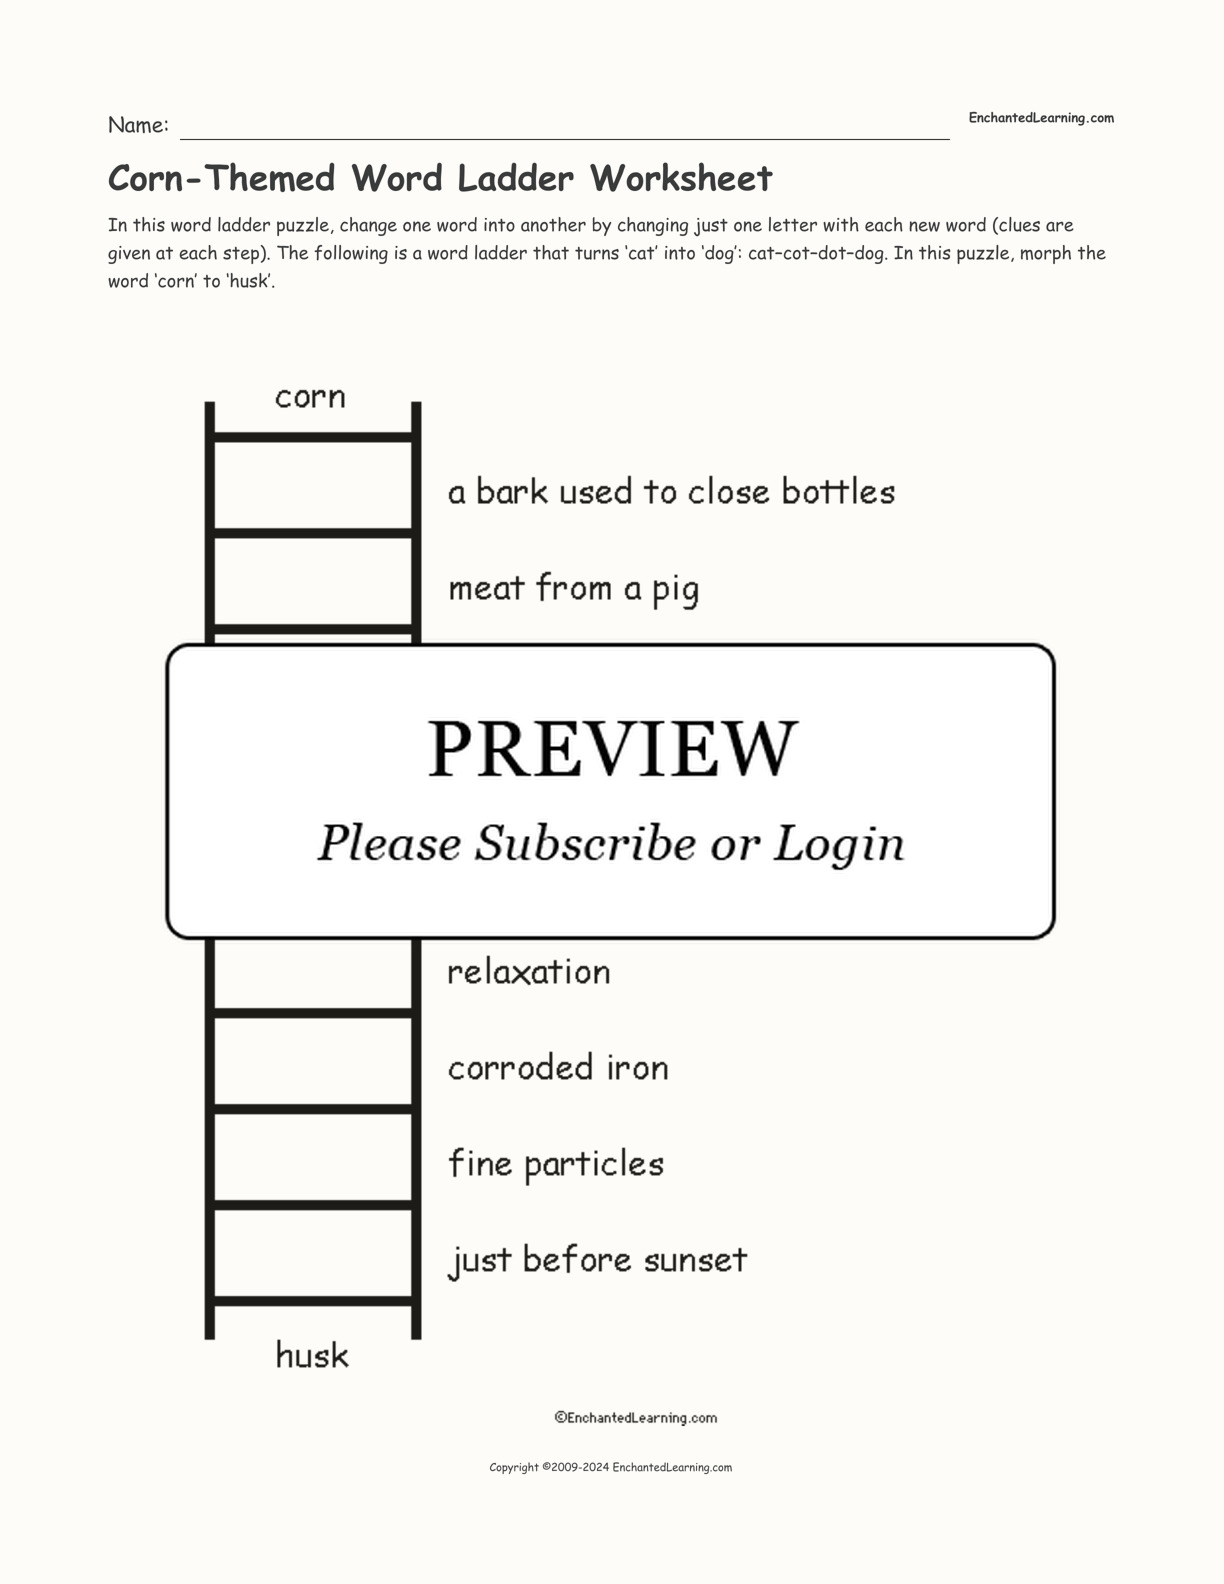 Corn-Themed Word Ladder Worksheet interactive worksheet page 1